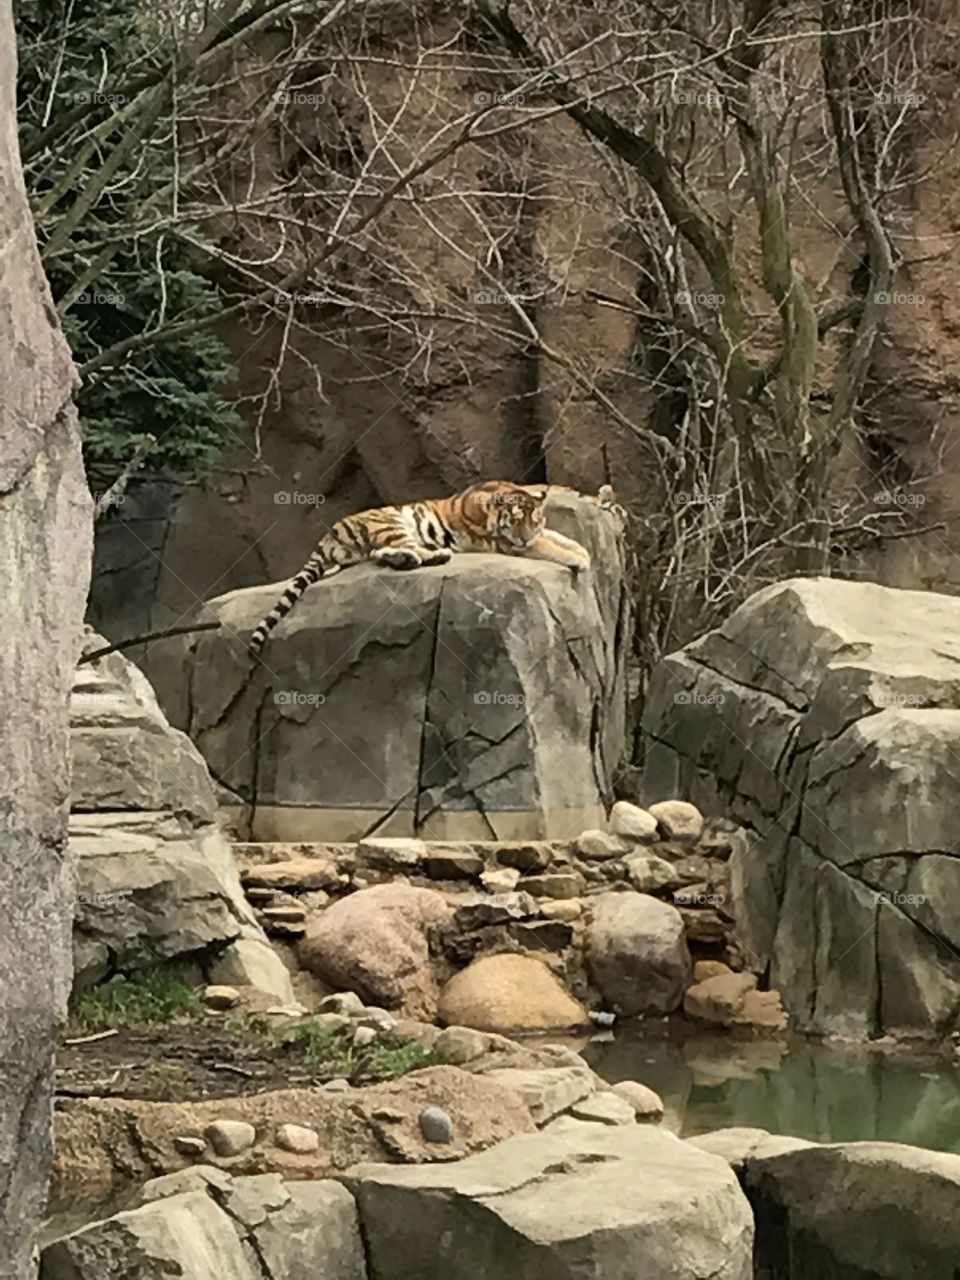 Amur tiger 